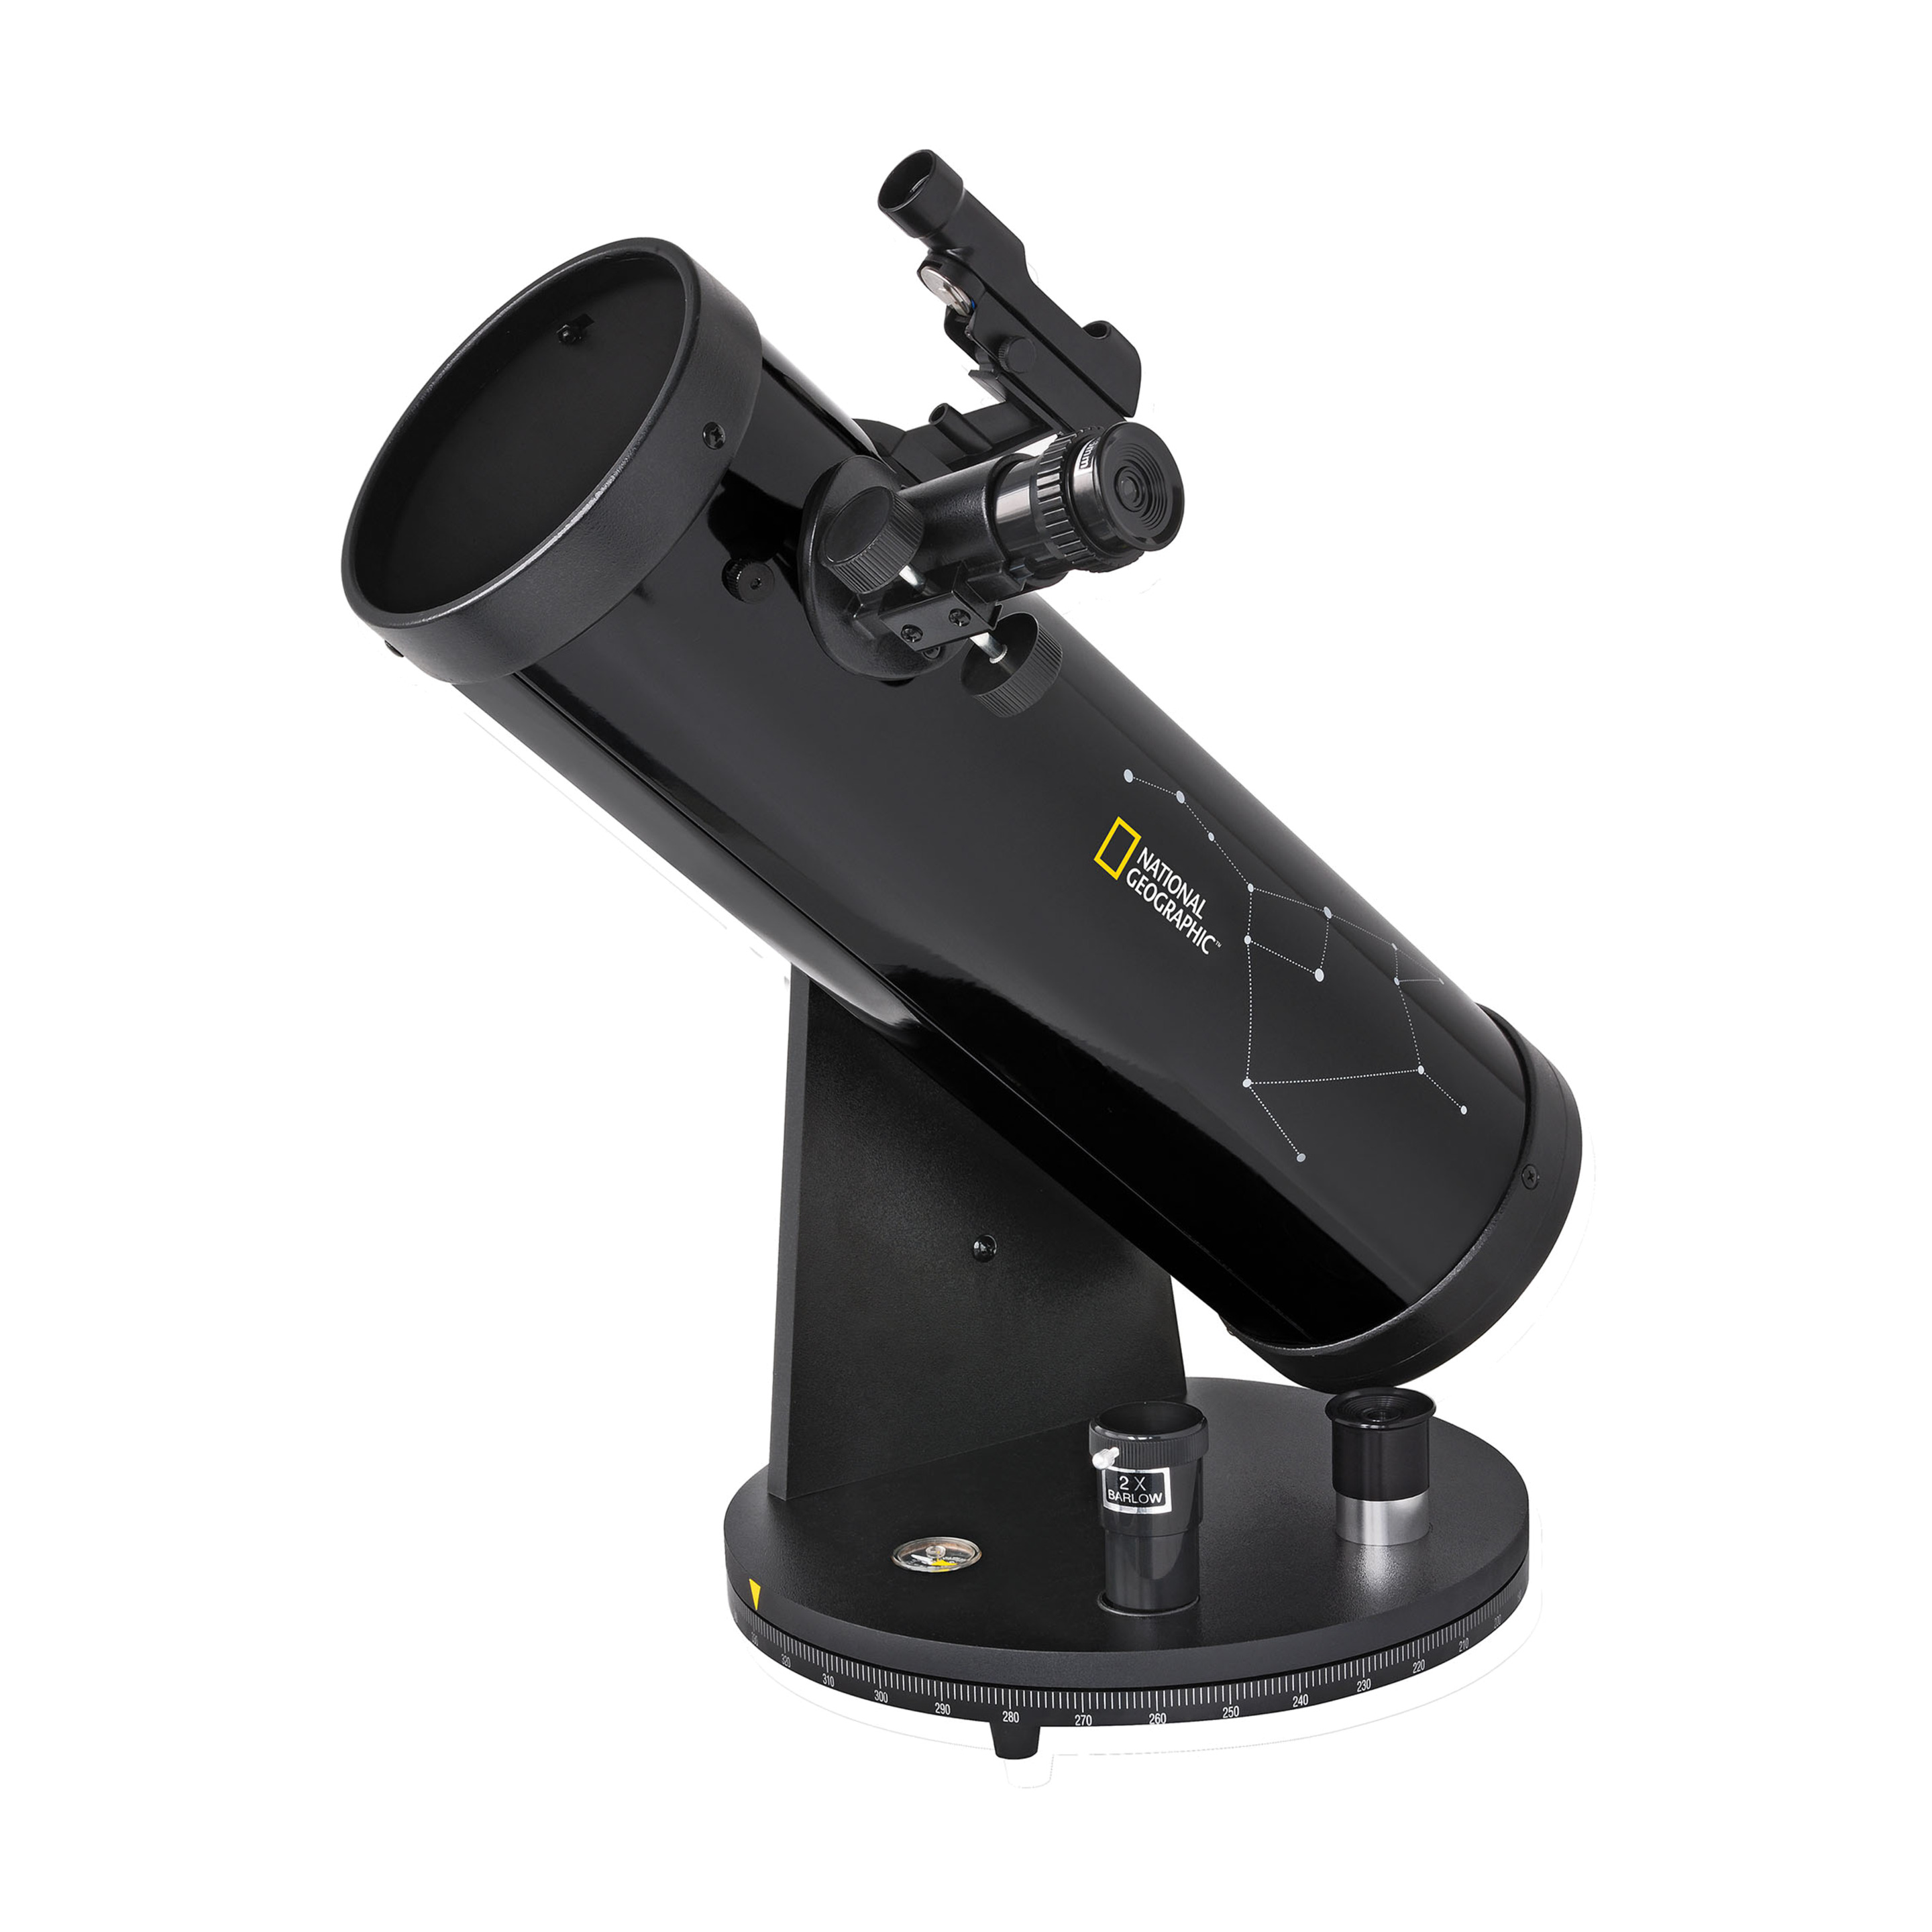 National Geographic 114/500 National Geographic Compact Telescópio Astronómico Automático - Preto | Sport Zone MKP